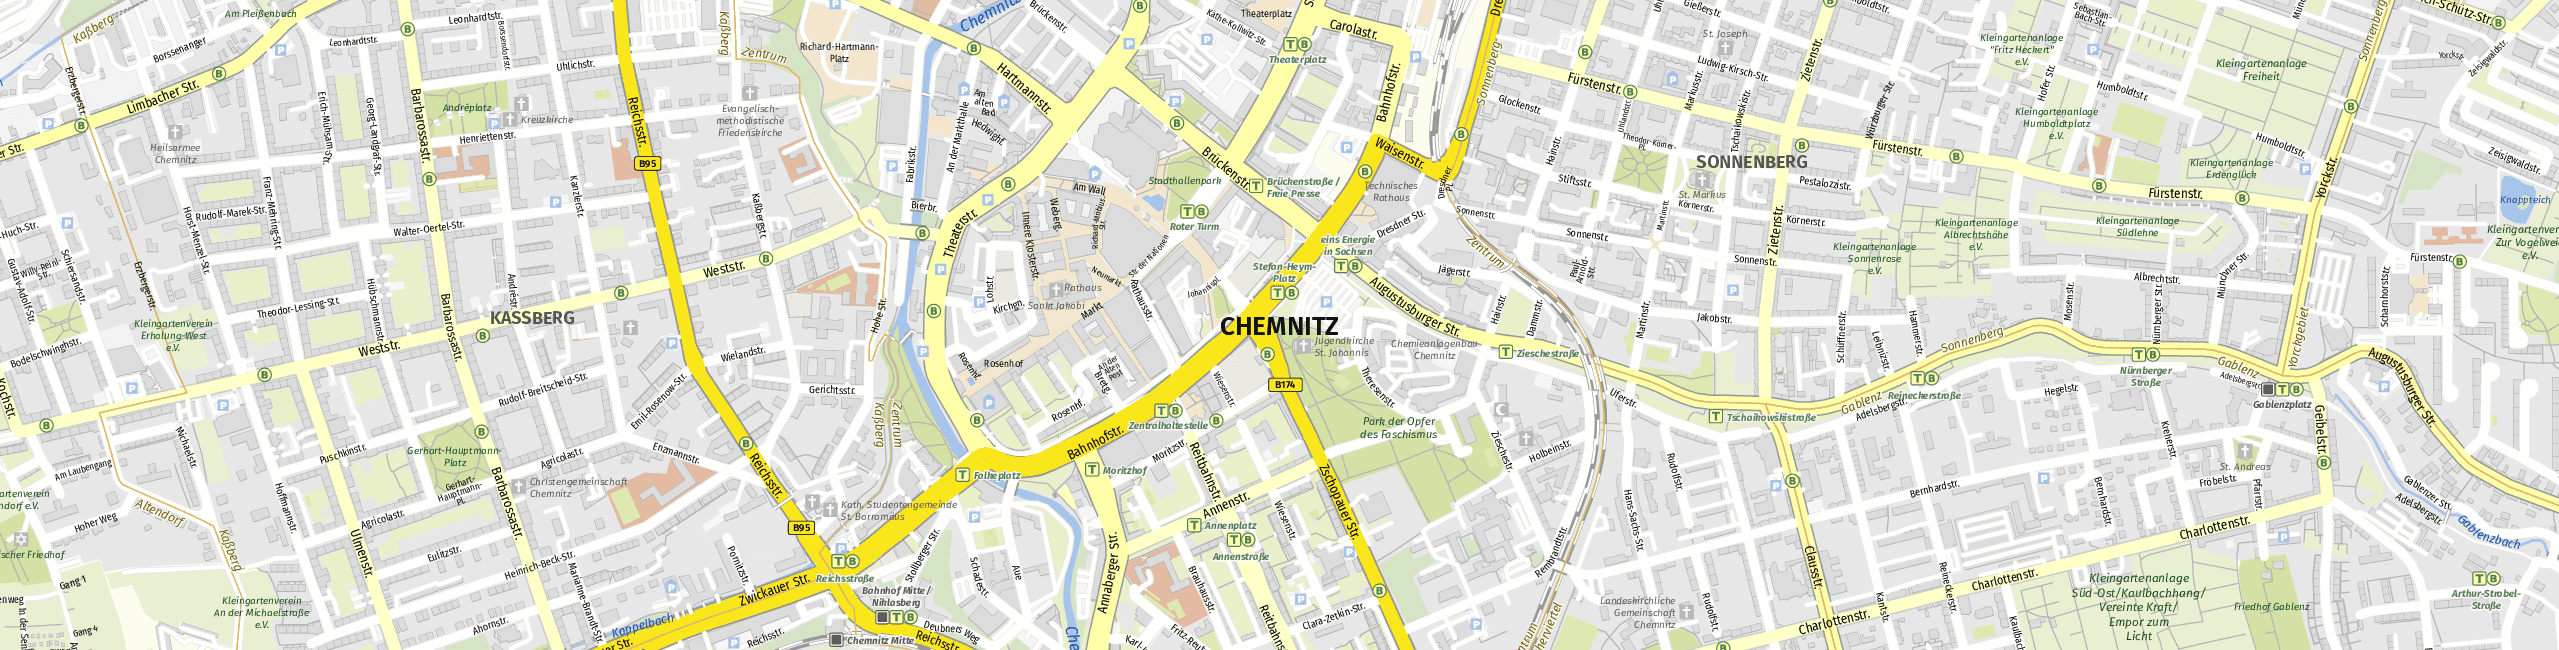 Stadtplan Chemnitz zum Downloaden.